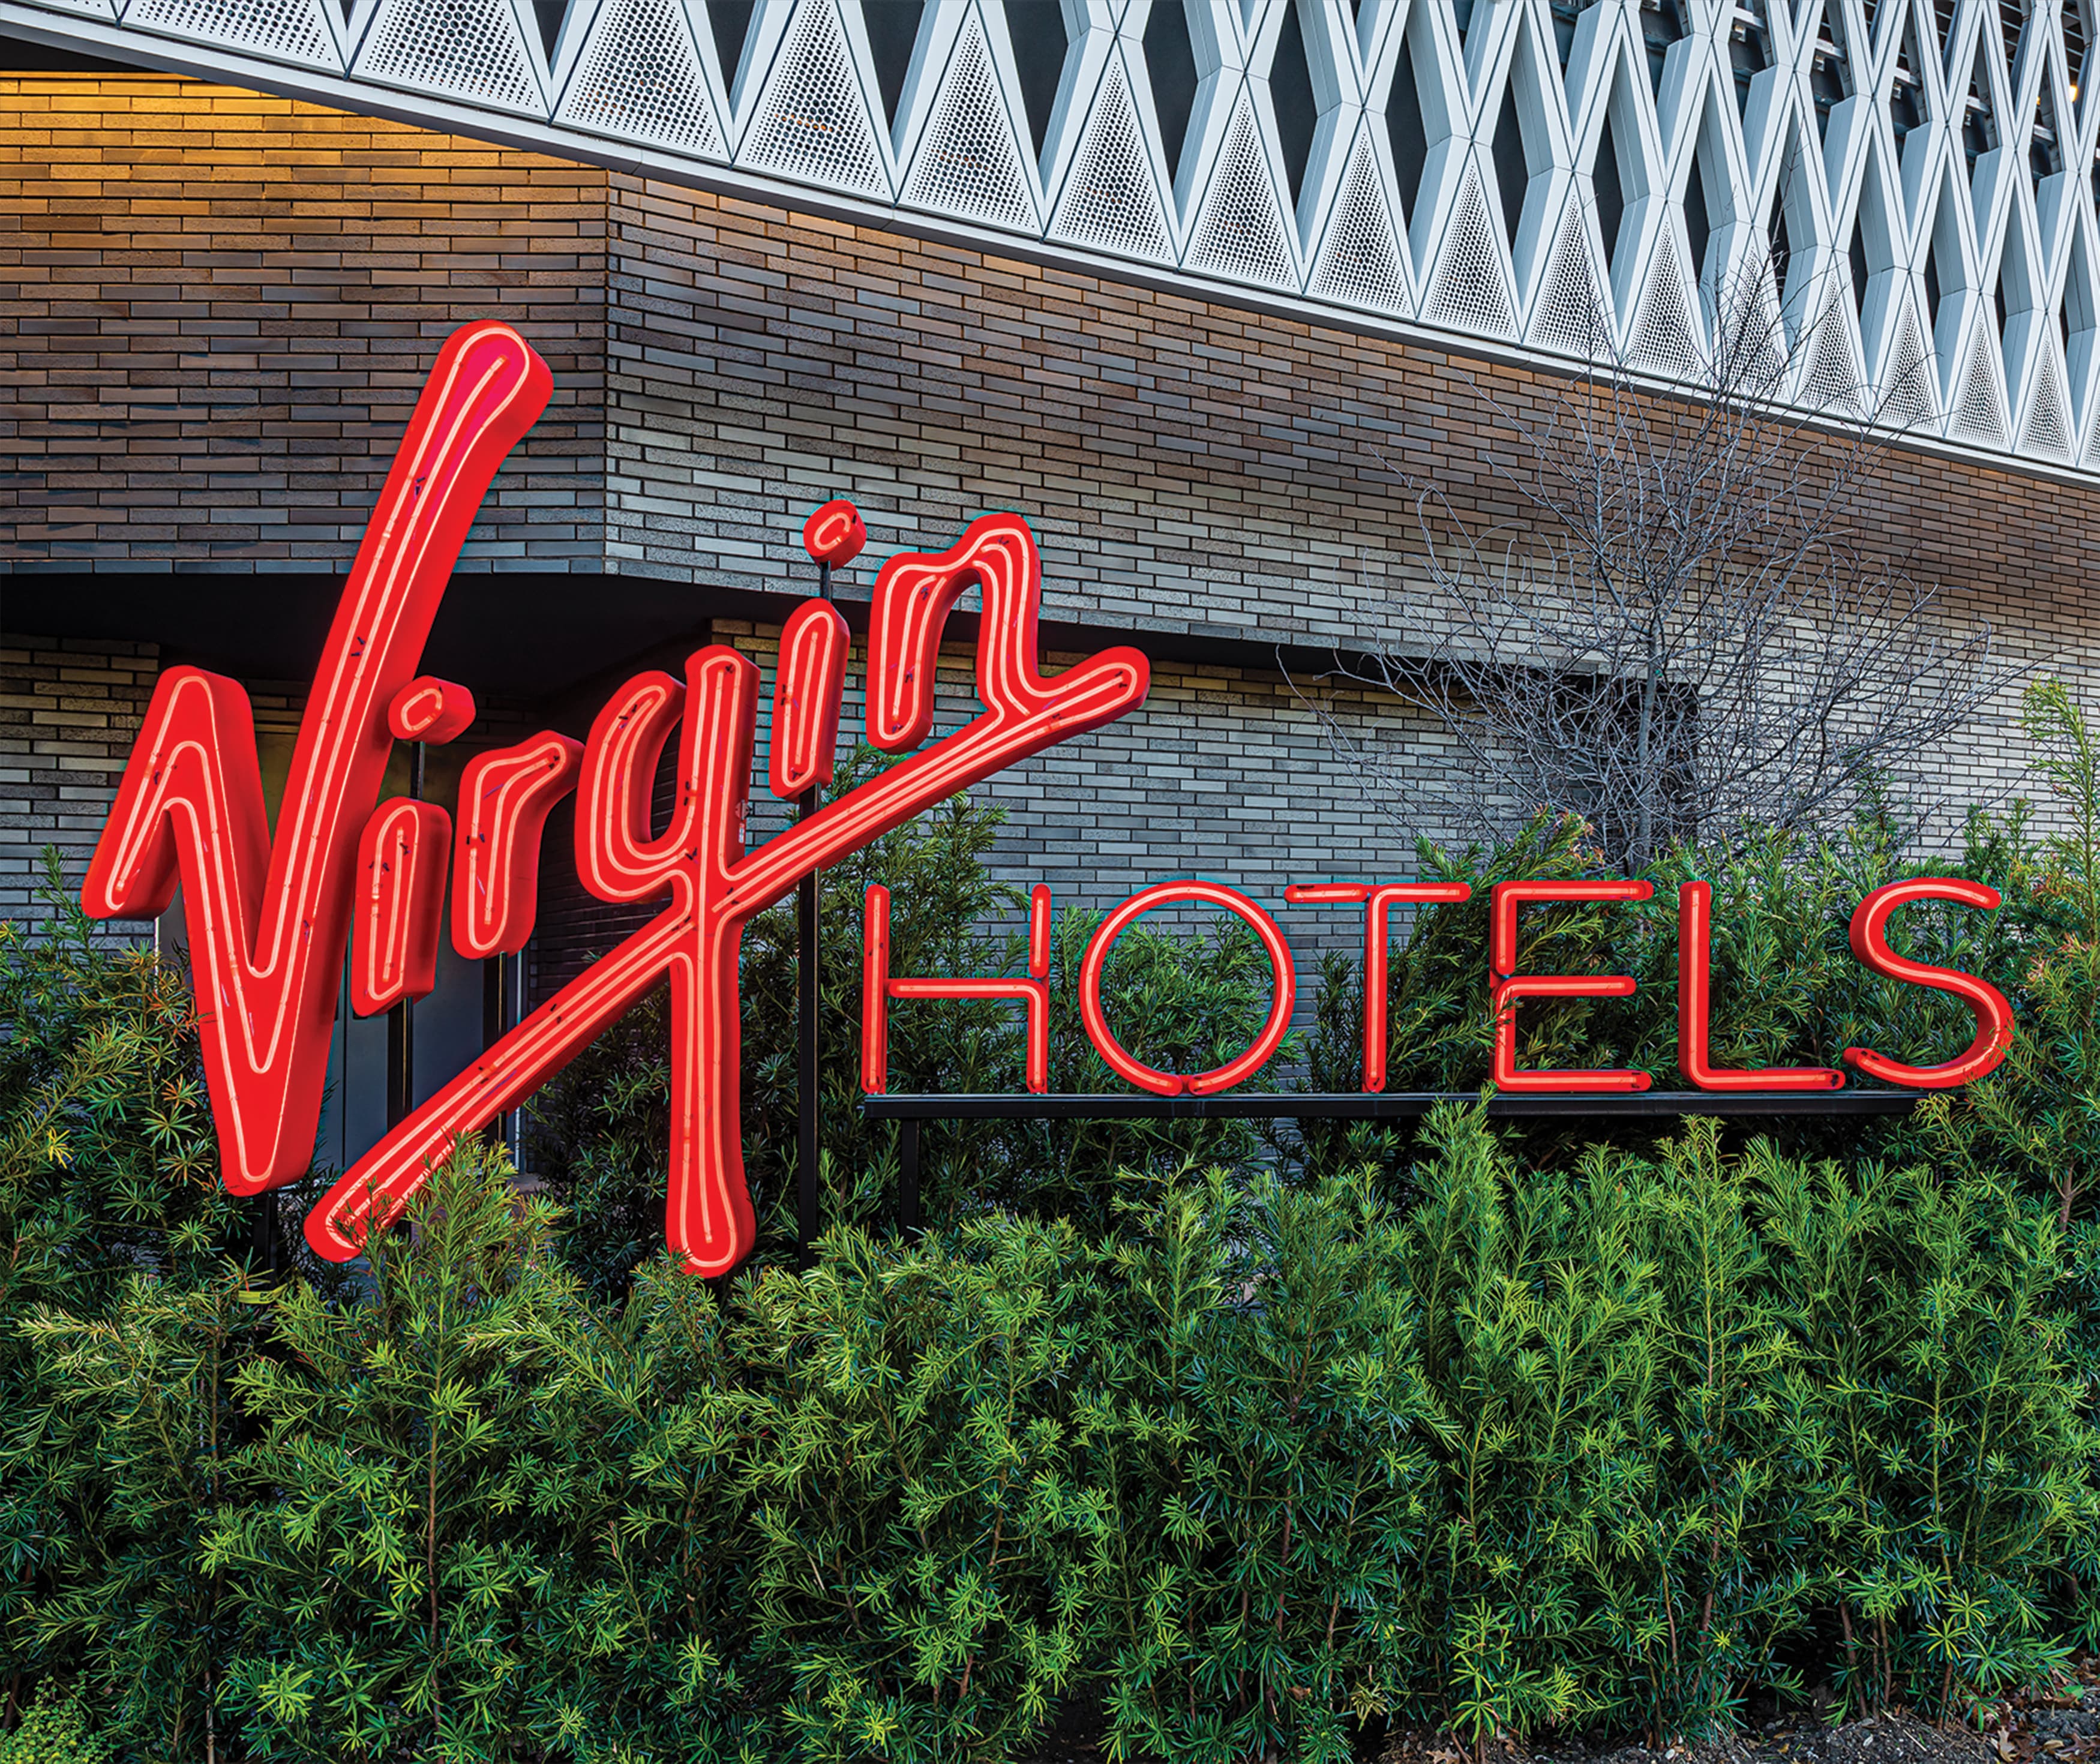 Virgin Hotels Exposed Neon Hospitality Signage